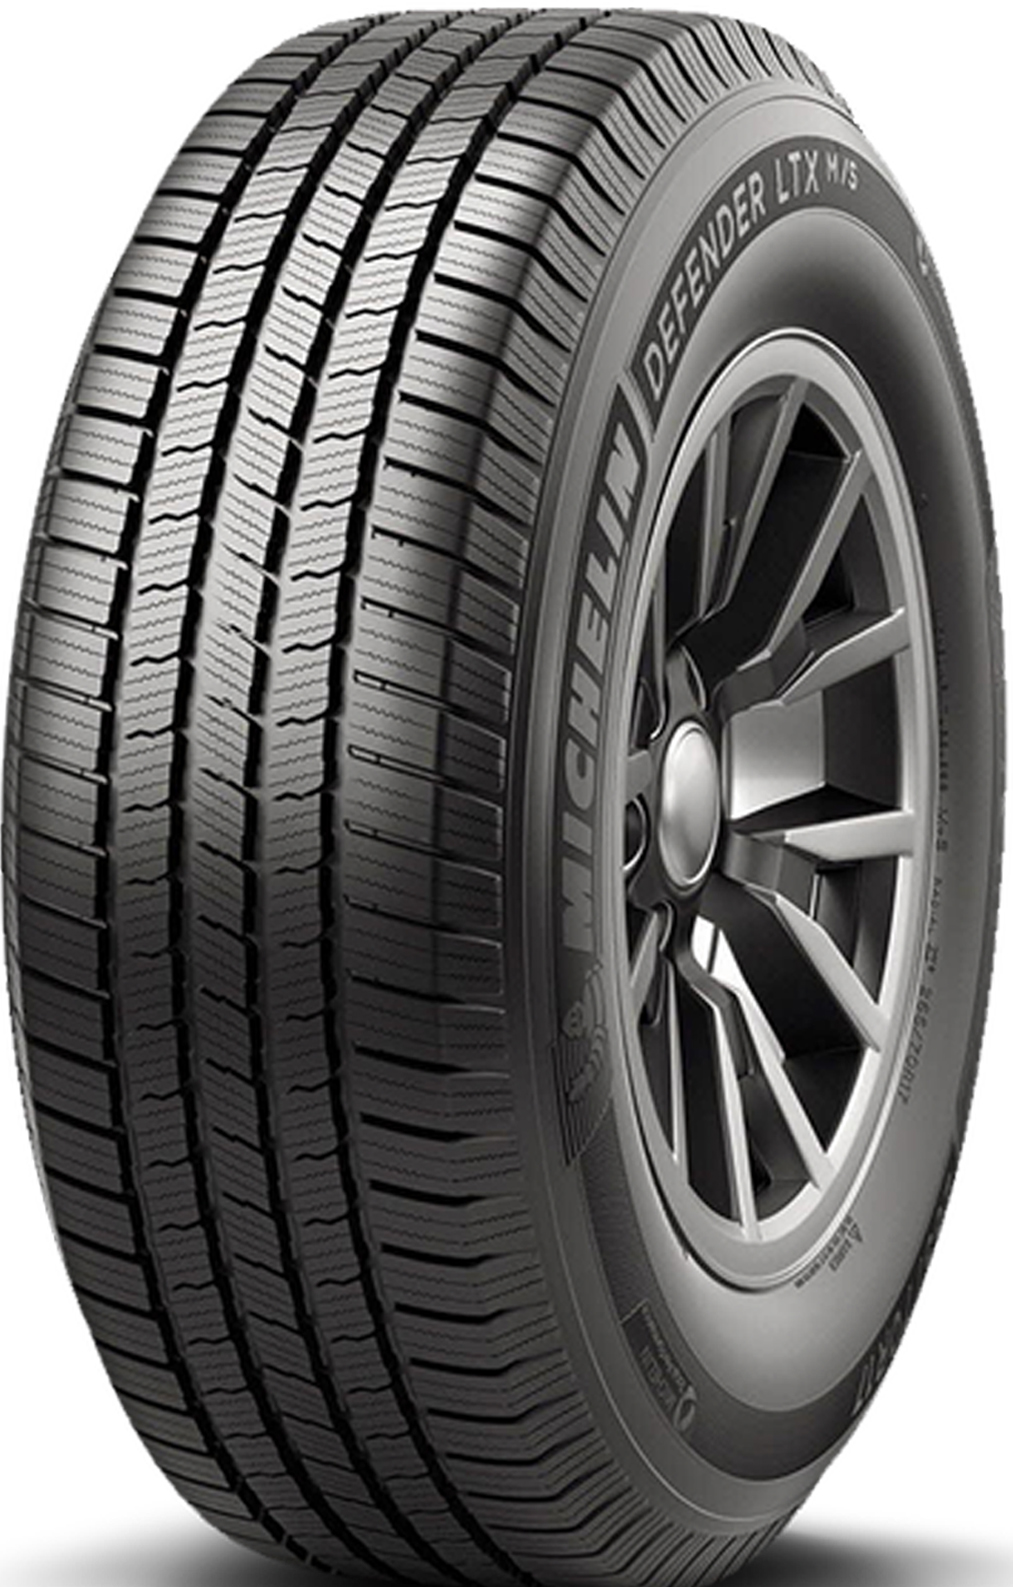 Michelin Defender LTX M/S All Season Tires | Point S